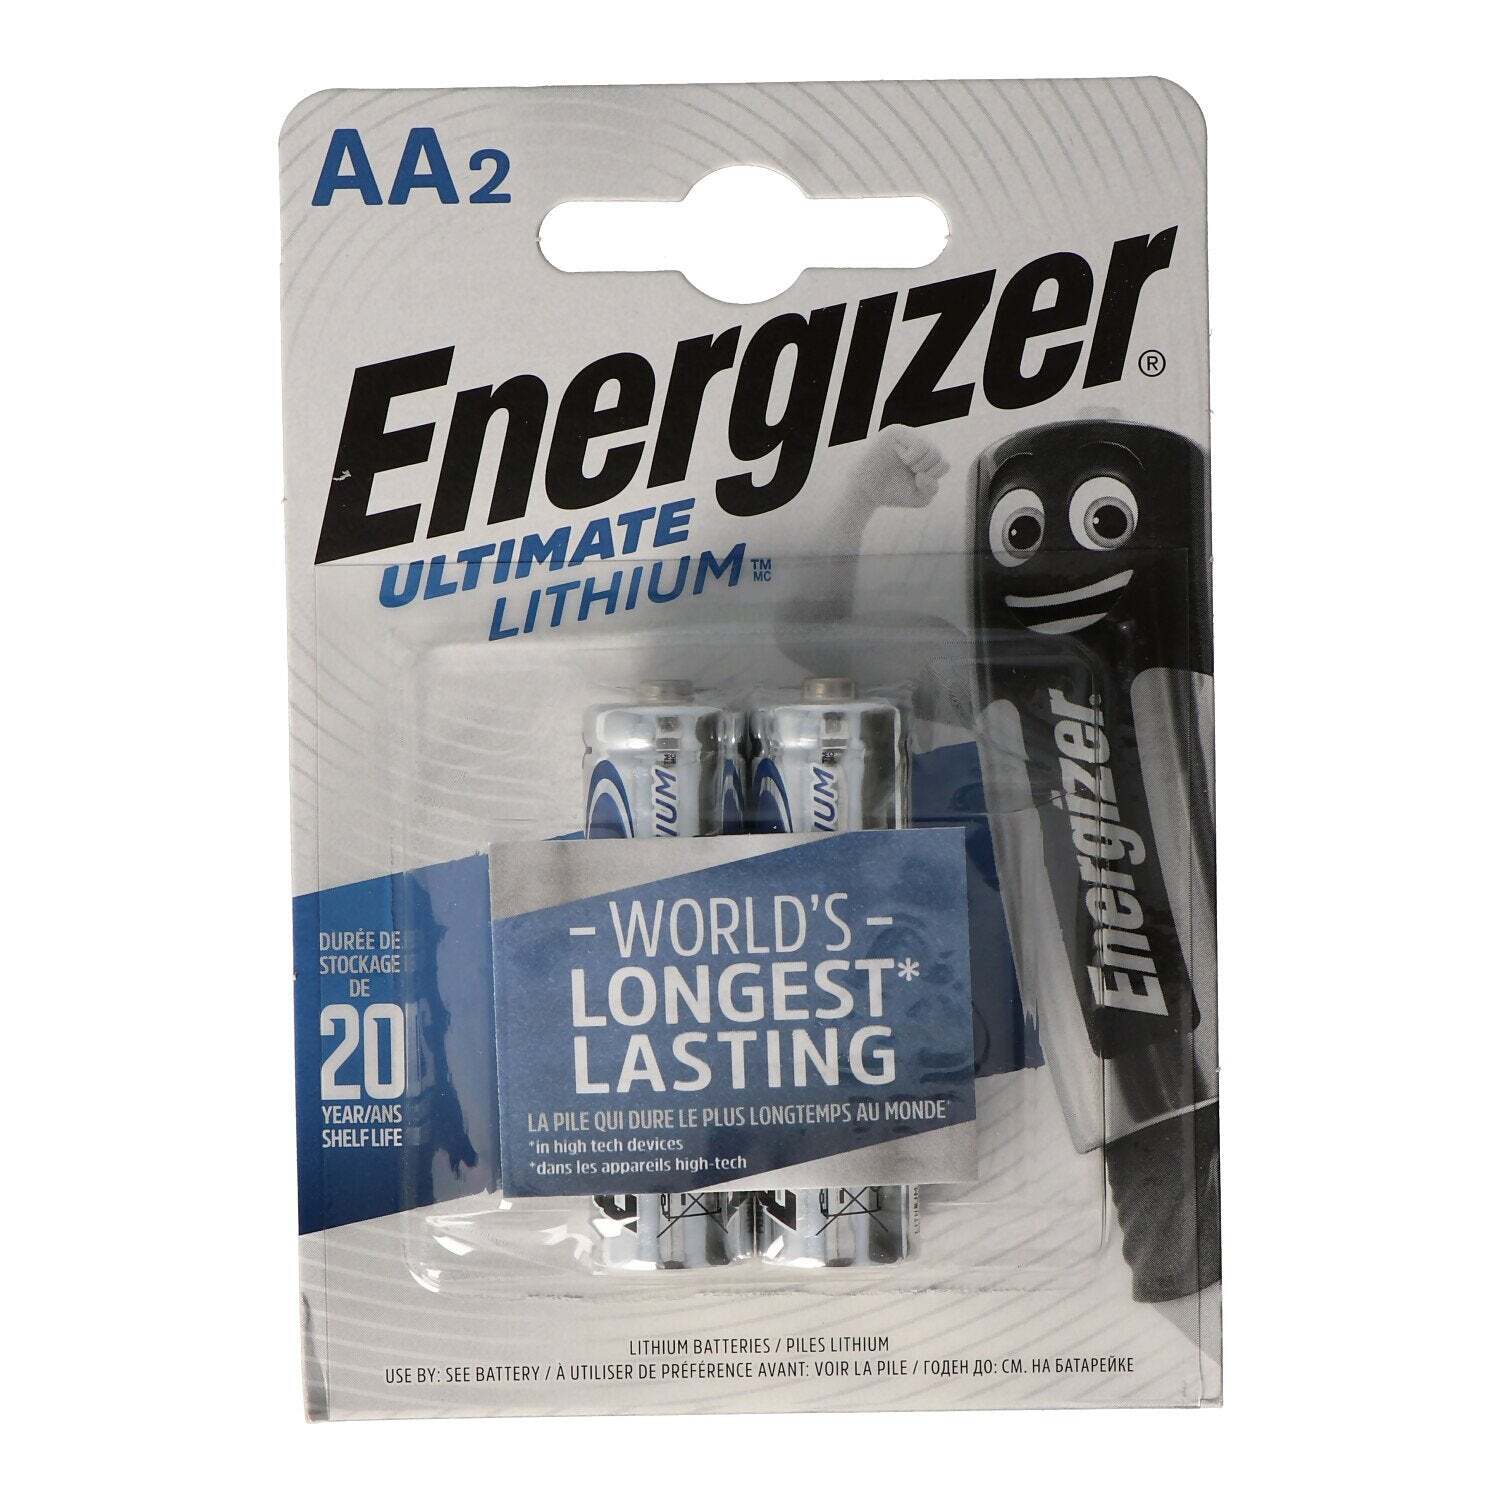 Energizer Energizer L91 lithiumbatterij AA 1,5 volt, 3000 mAh dubbele blister